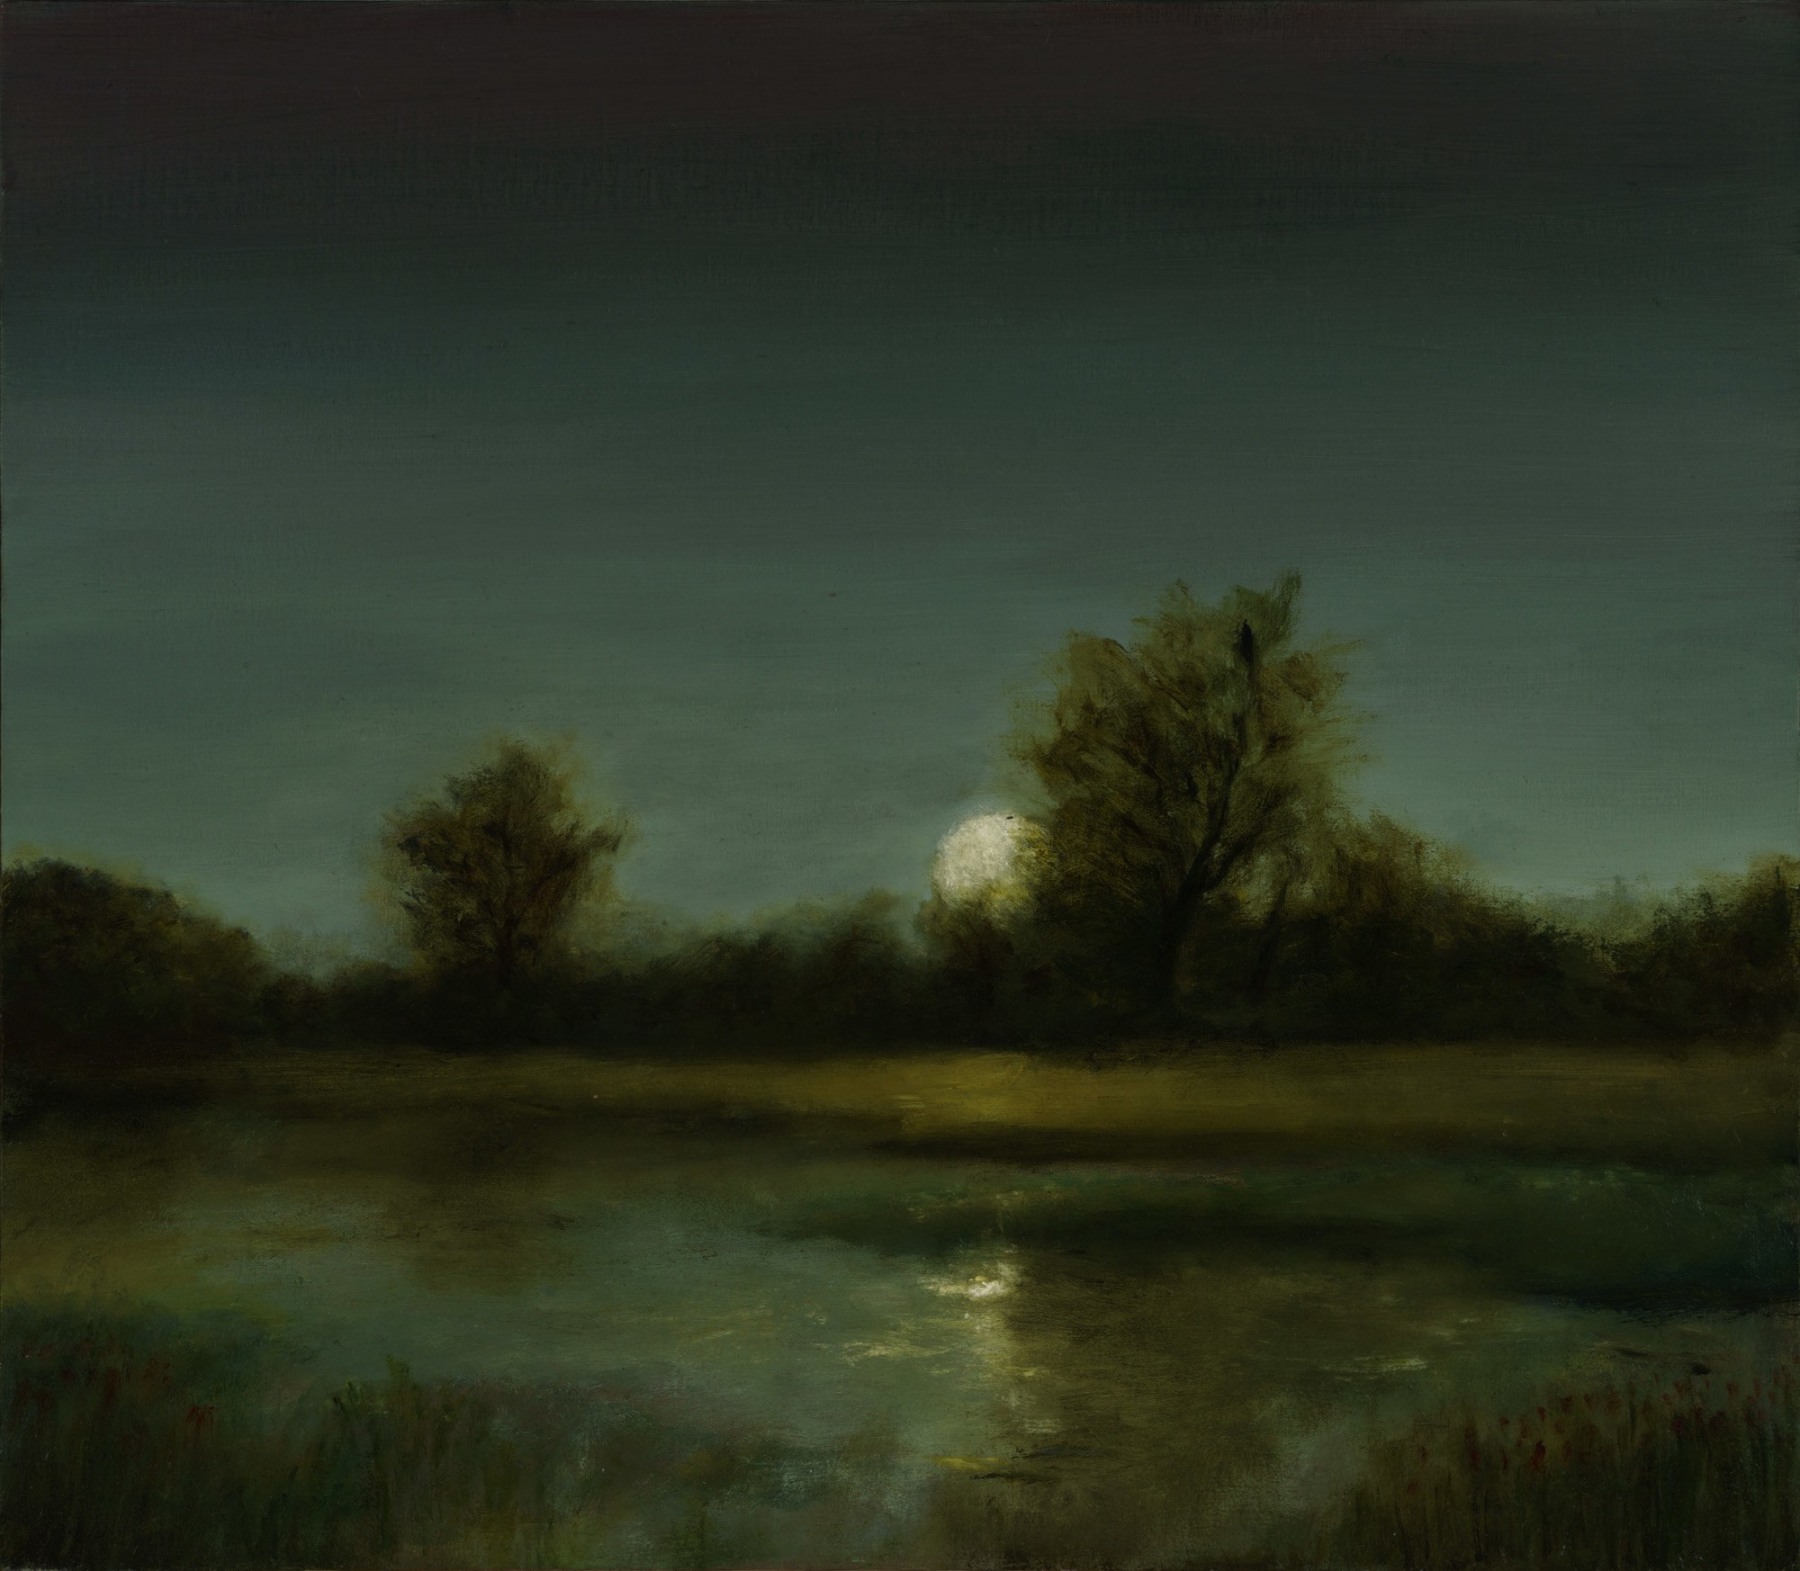 Chris Peters, Moon Over Marsh